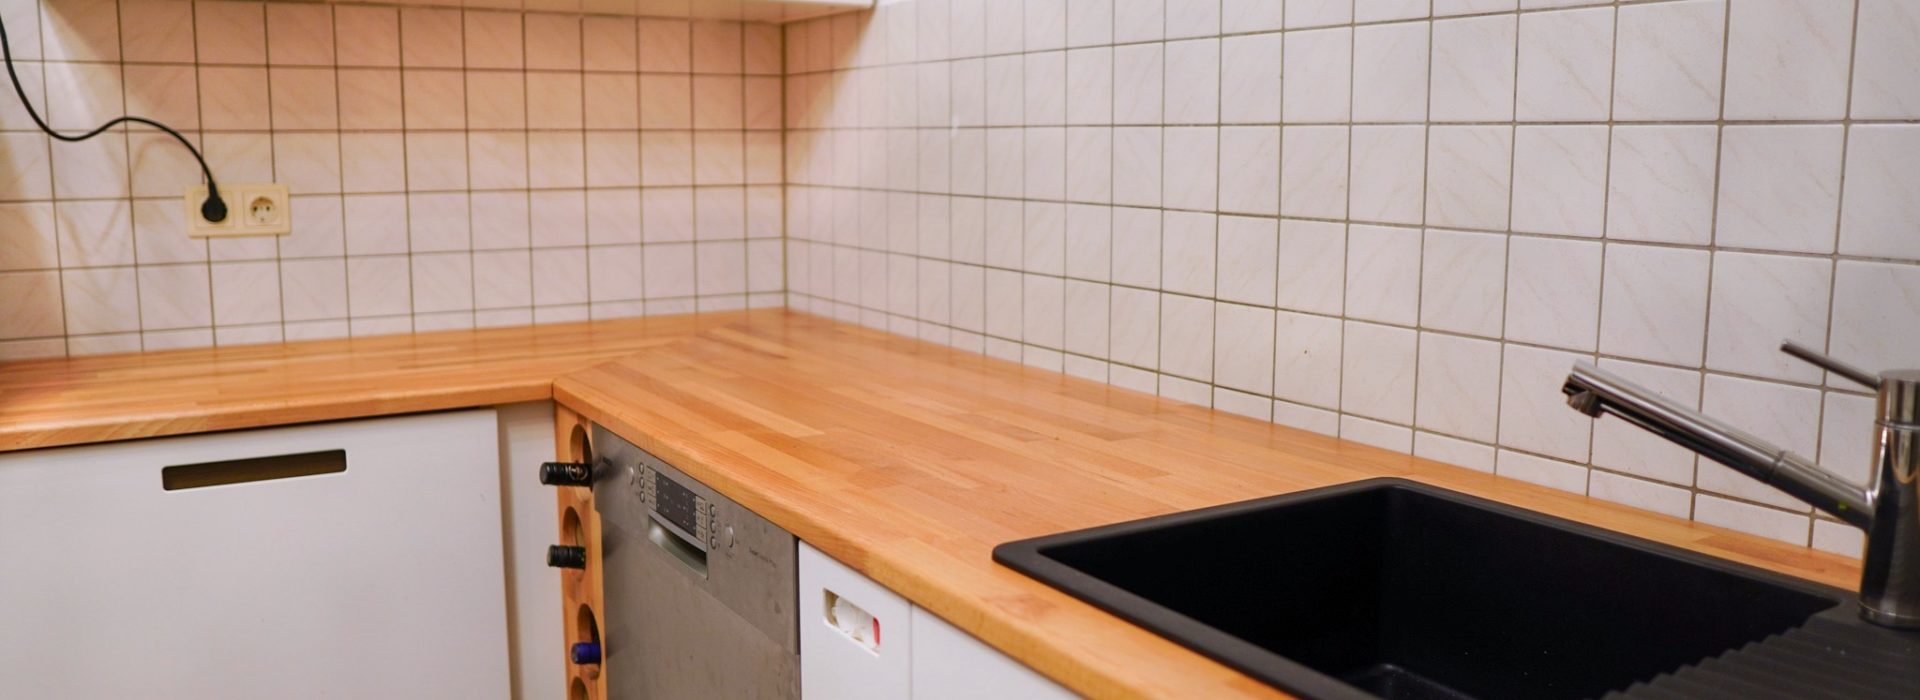 Individuelle Küche   DIY Arbeitsplatte   Holzkombinat